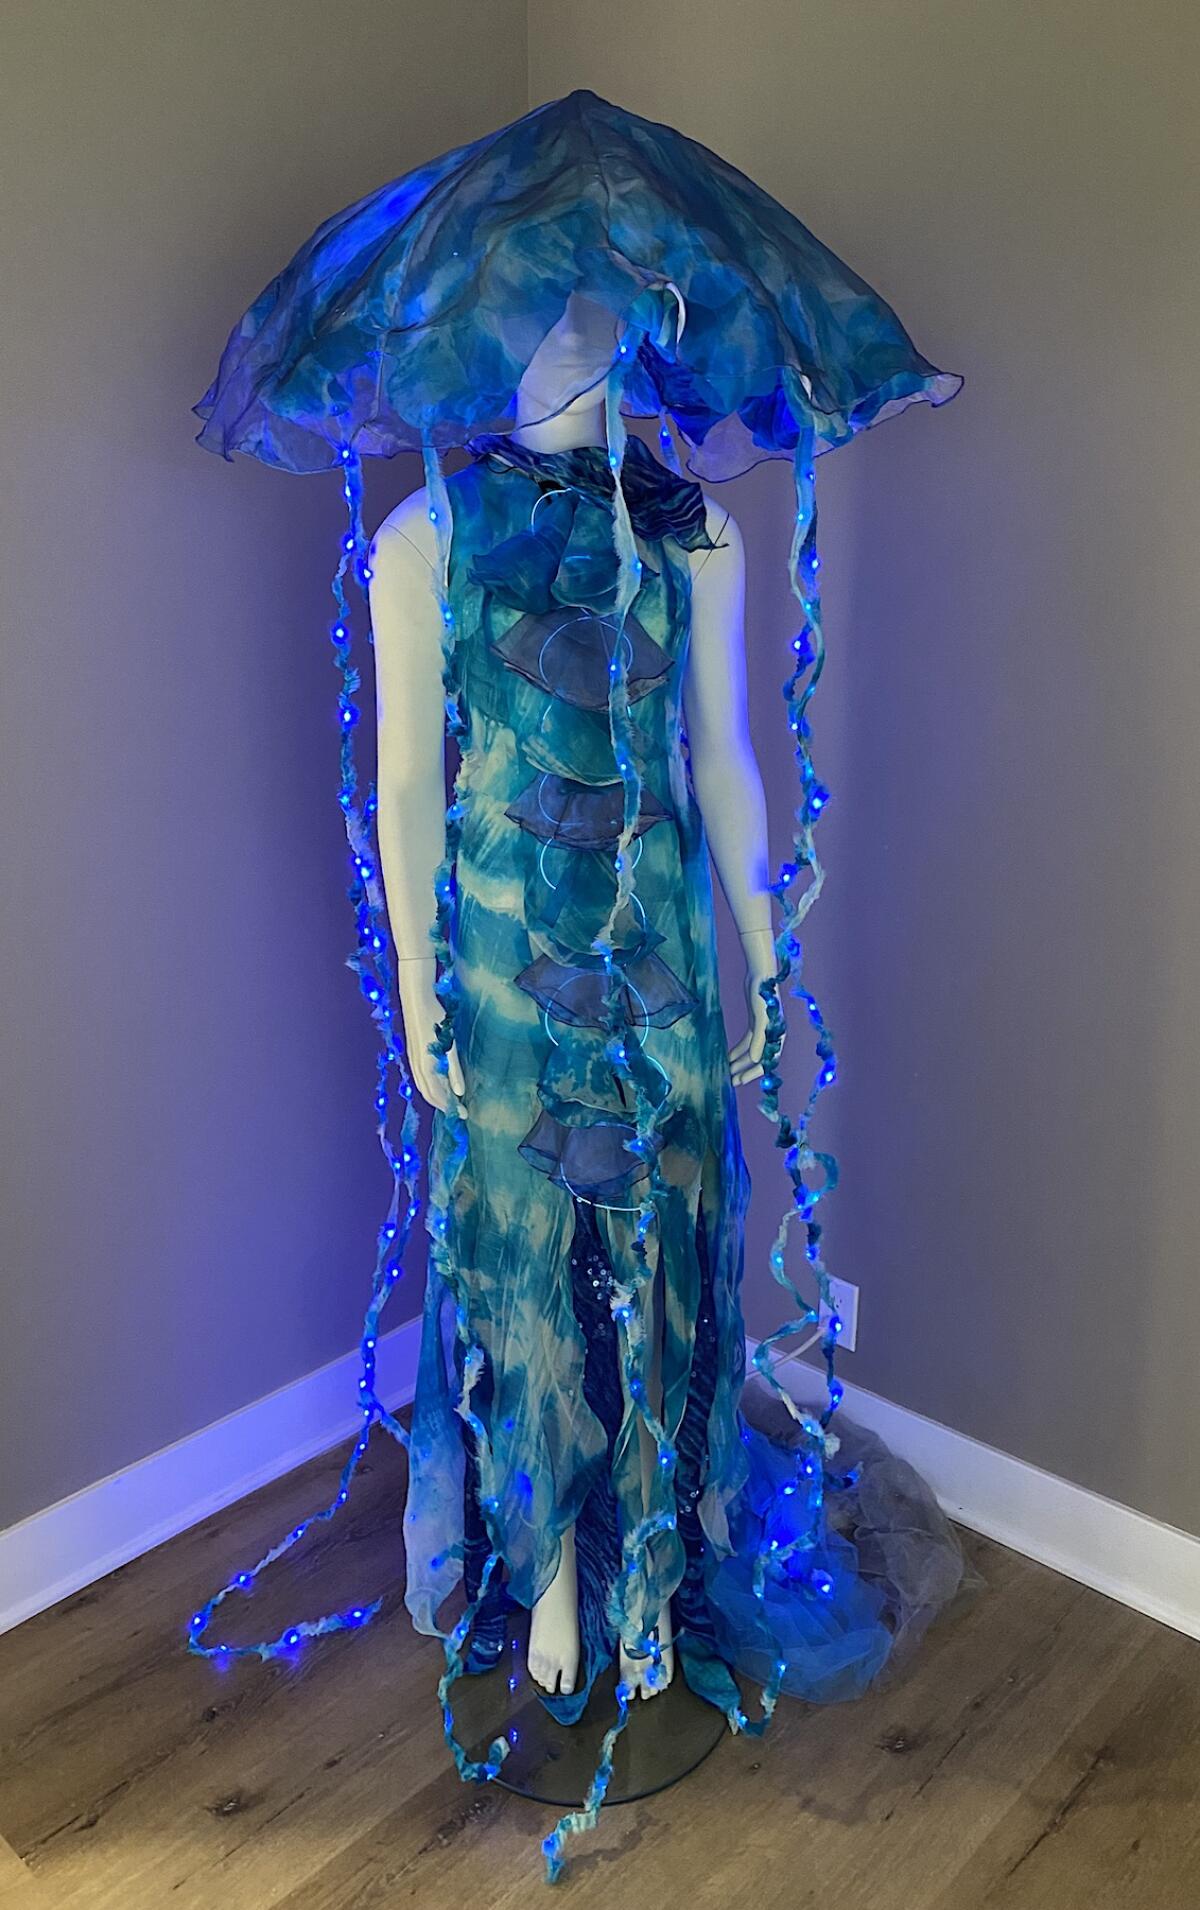 Charged Up. A neon jellyfish dress by Tara Ritacco.